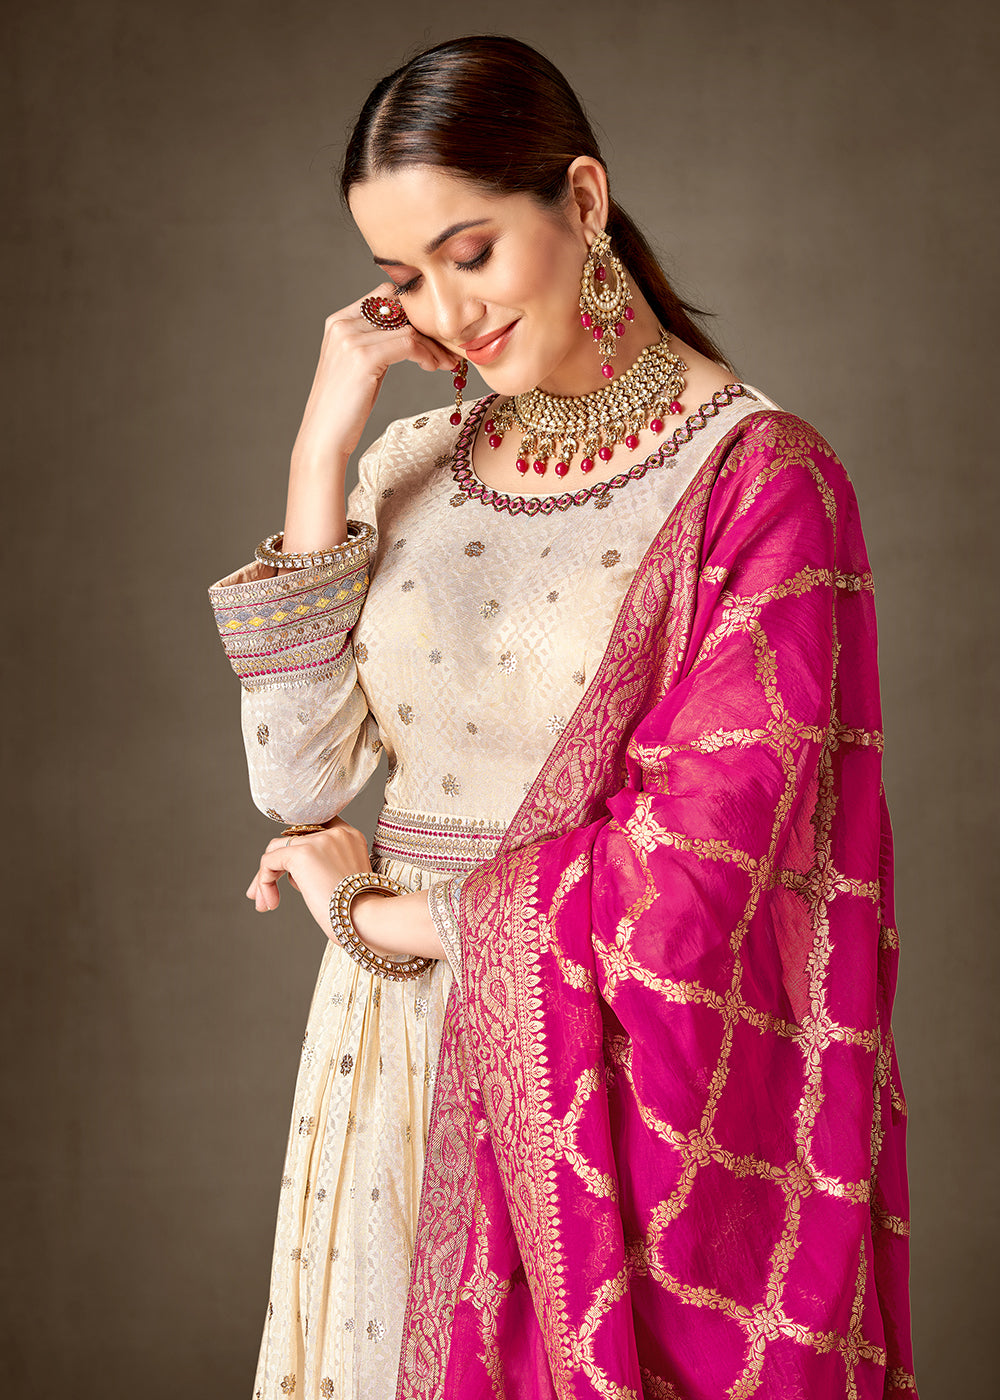 Buy Now Cream & Pink Pure Silk Jacquard Slit Style Anarkali Dress Online in USA, UK, Australia, New Zealand, Canada & Worldwide at Empress Clothing.